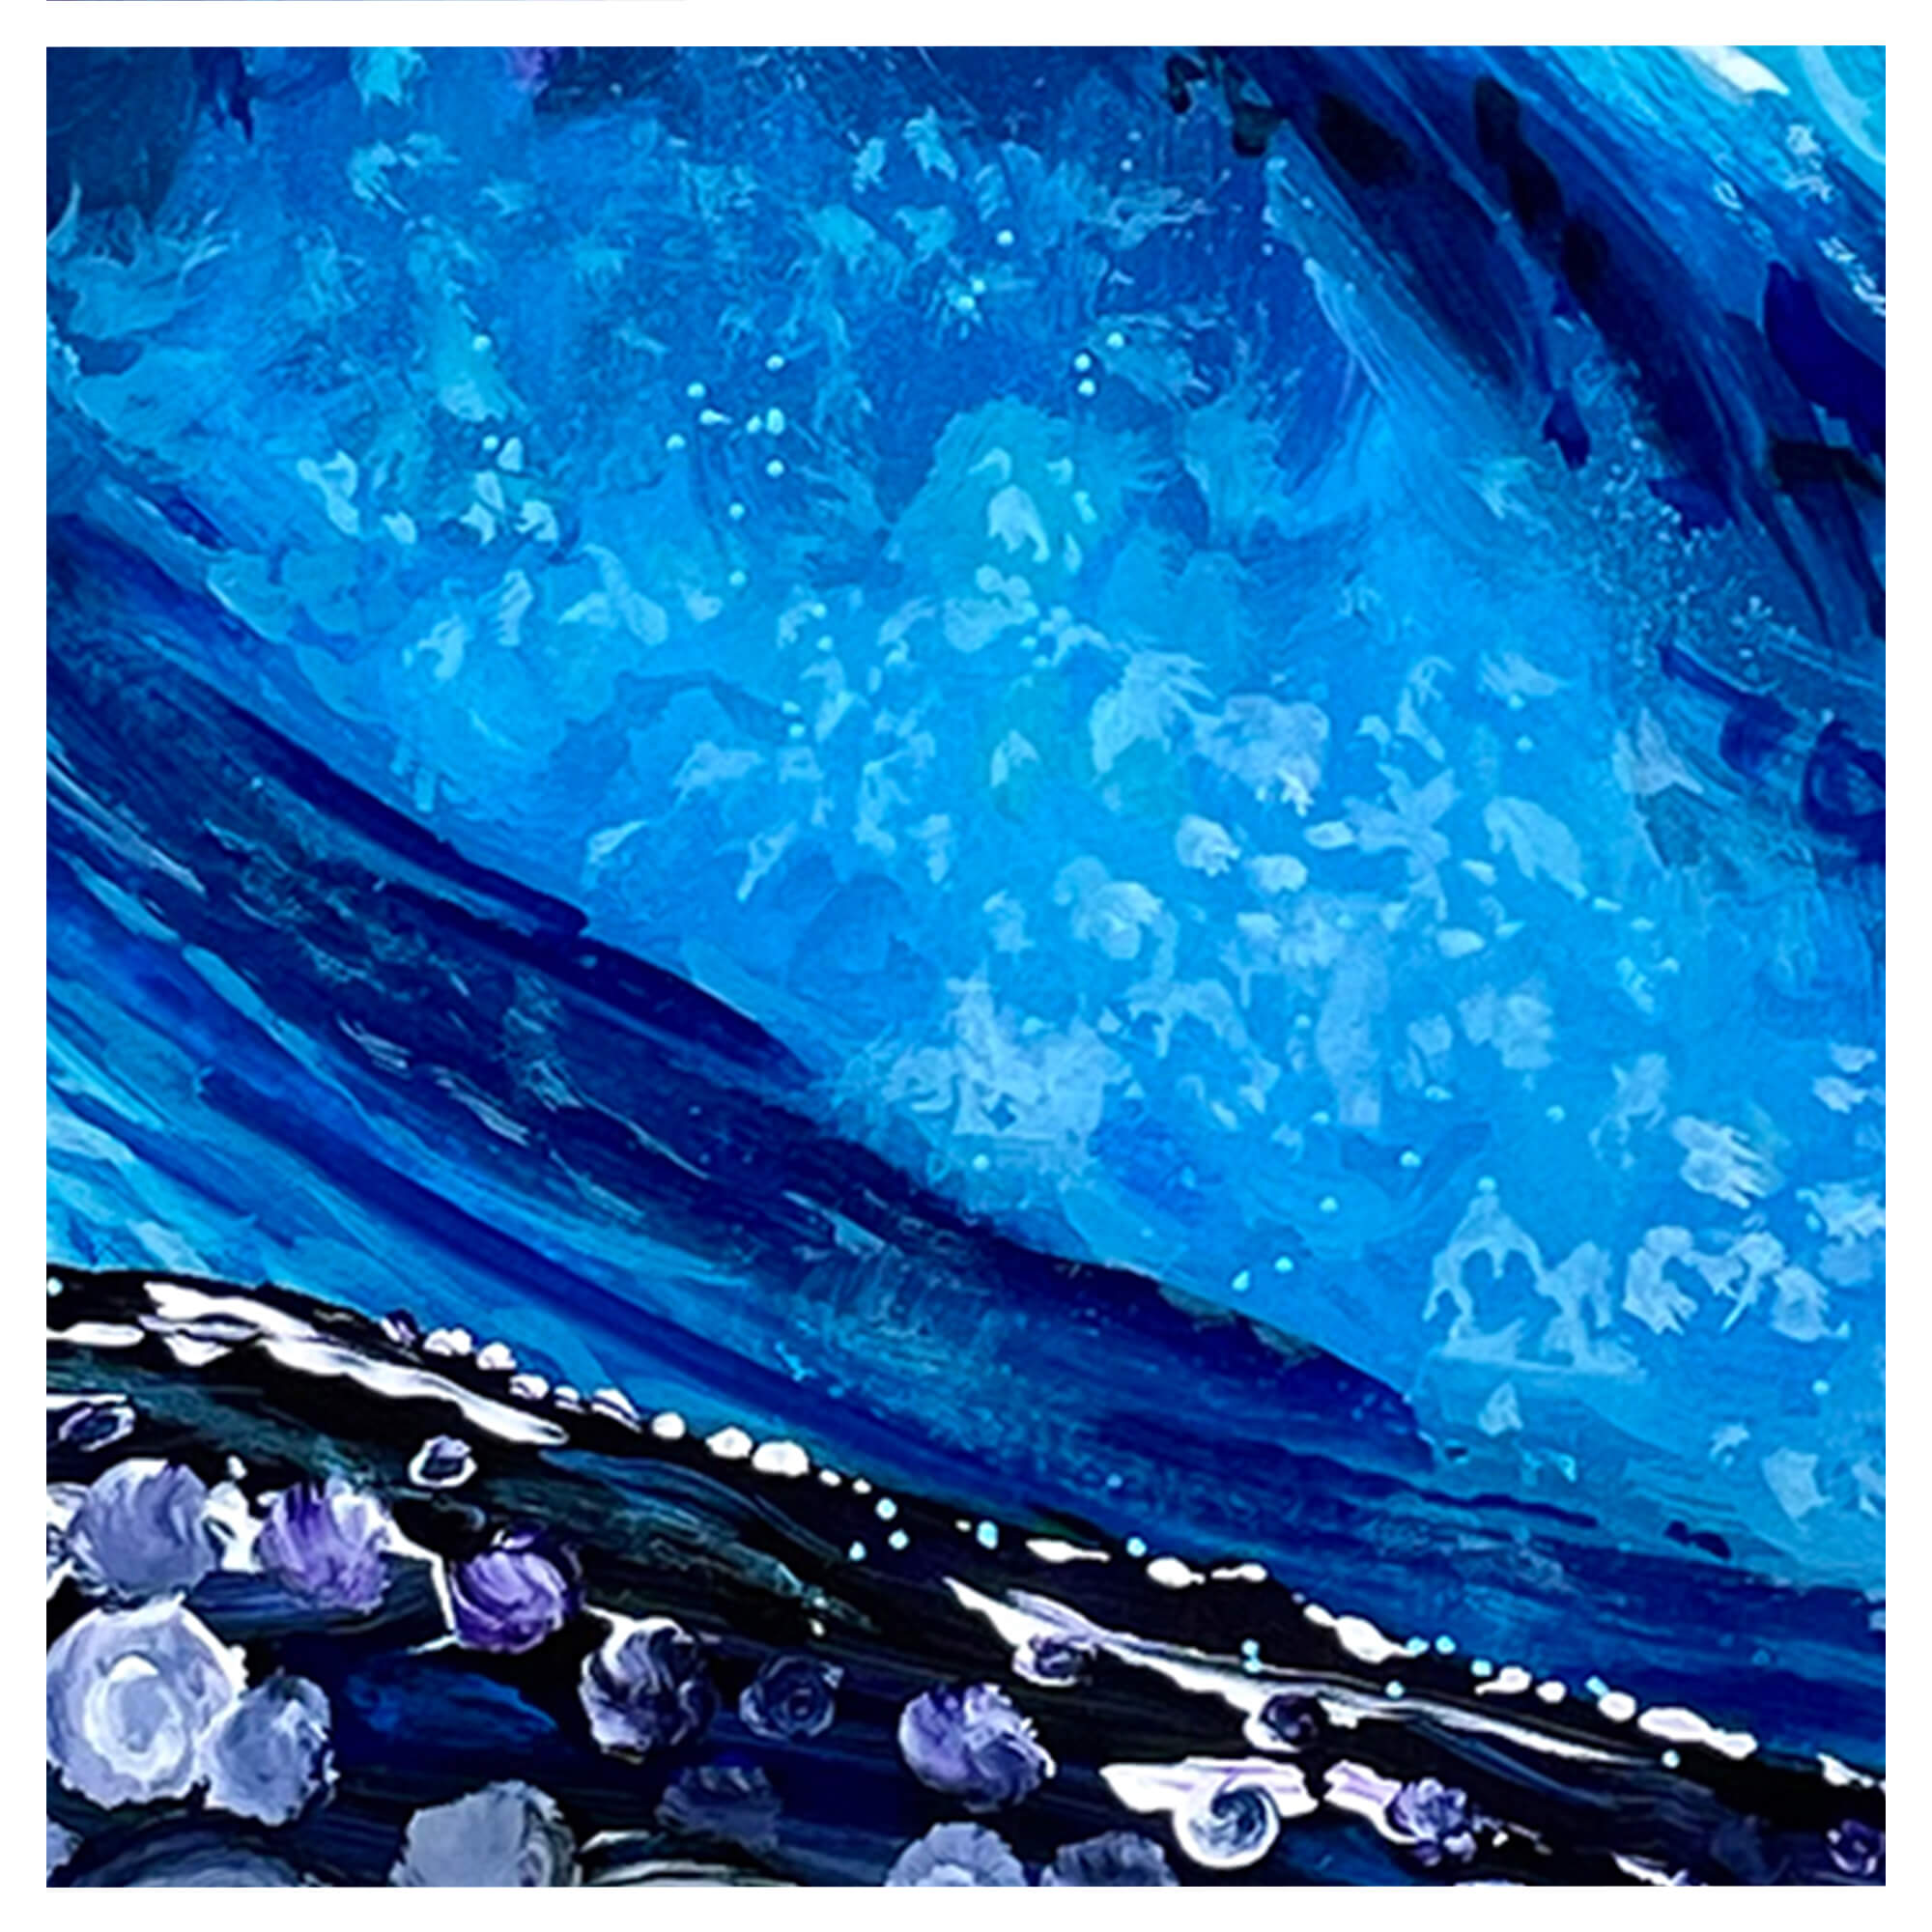 Blue wave art by Hawaii artist Patrick Parker